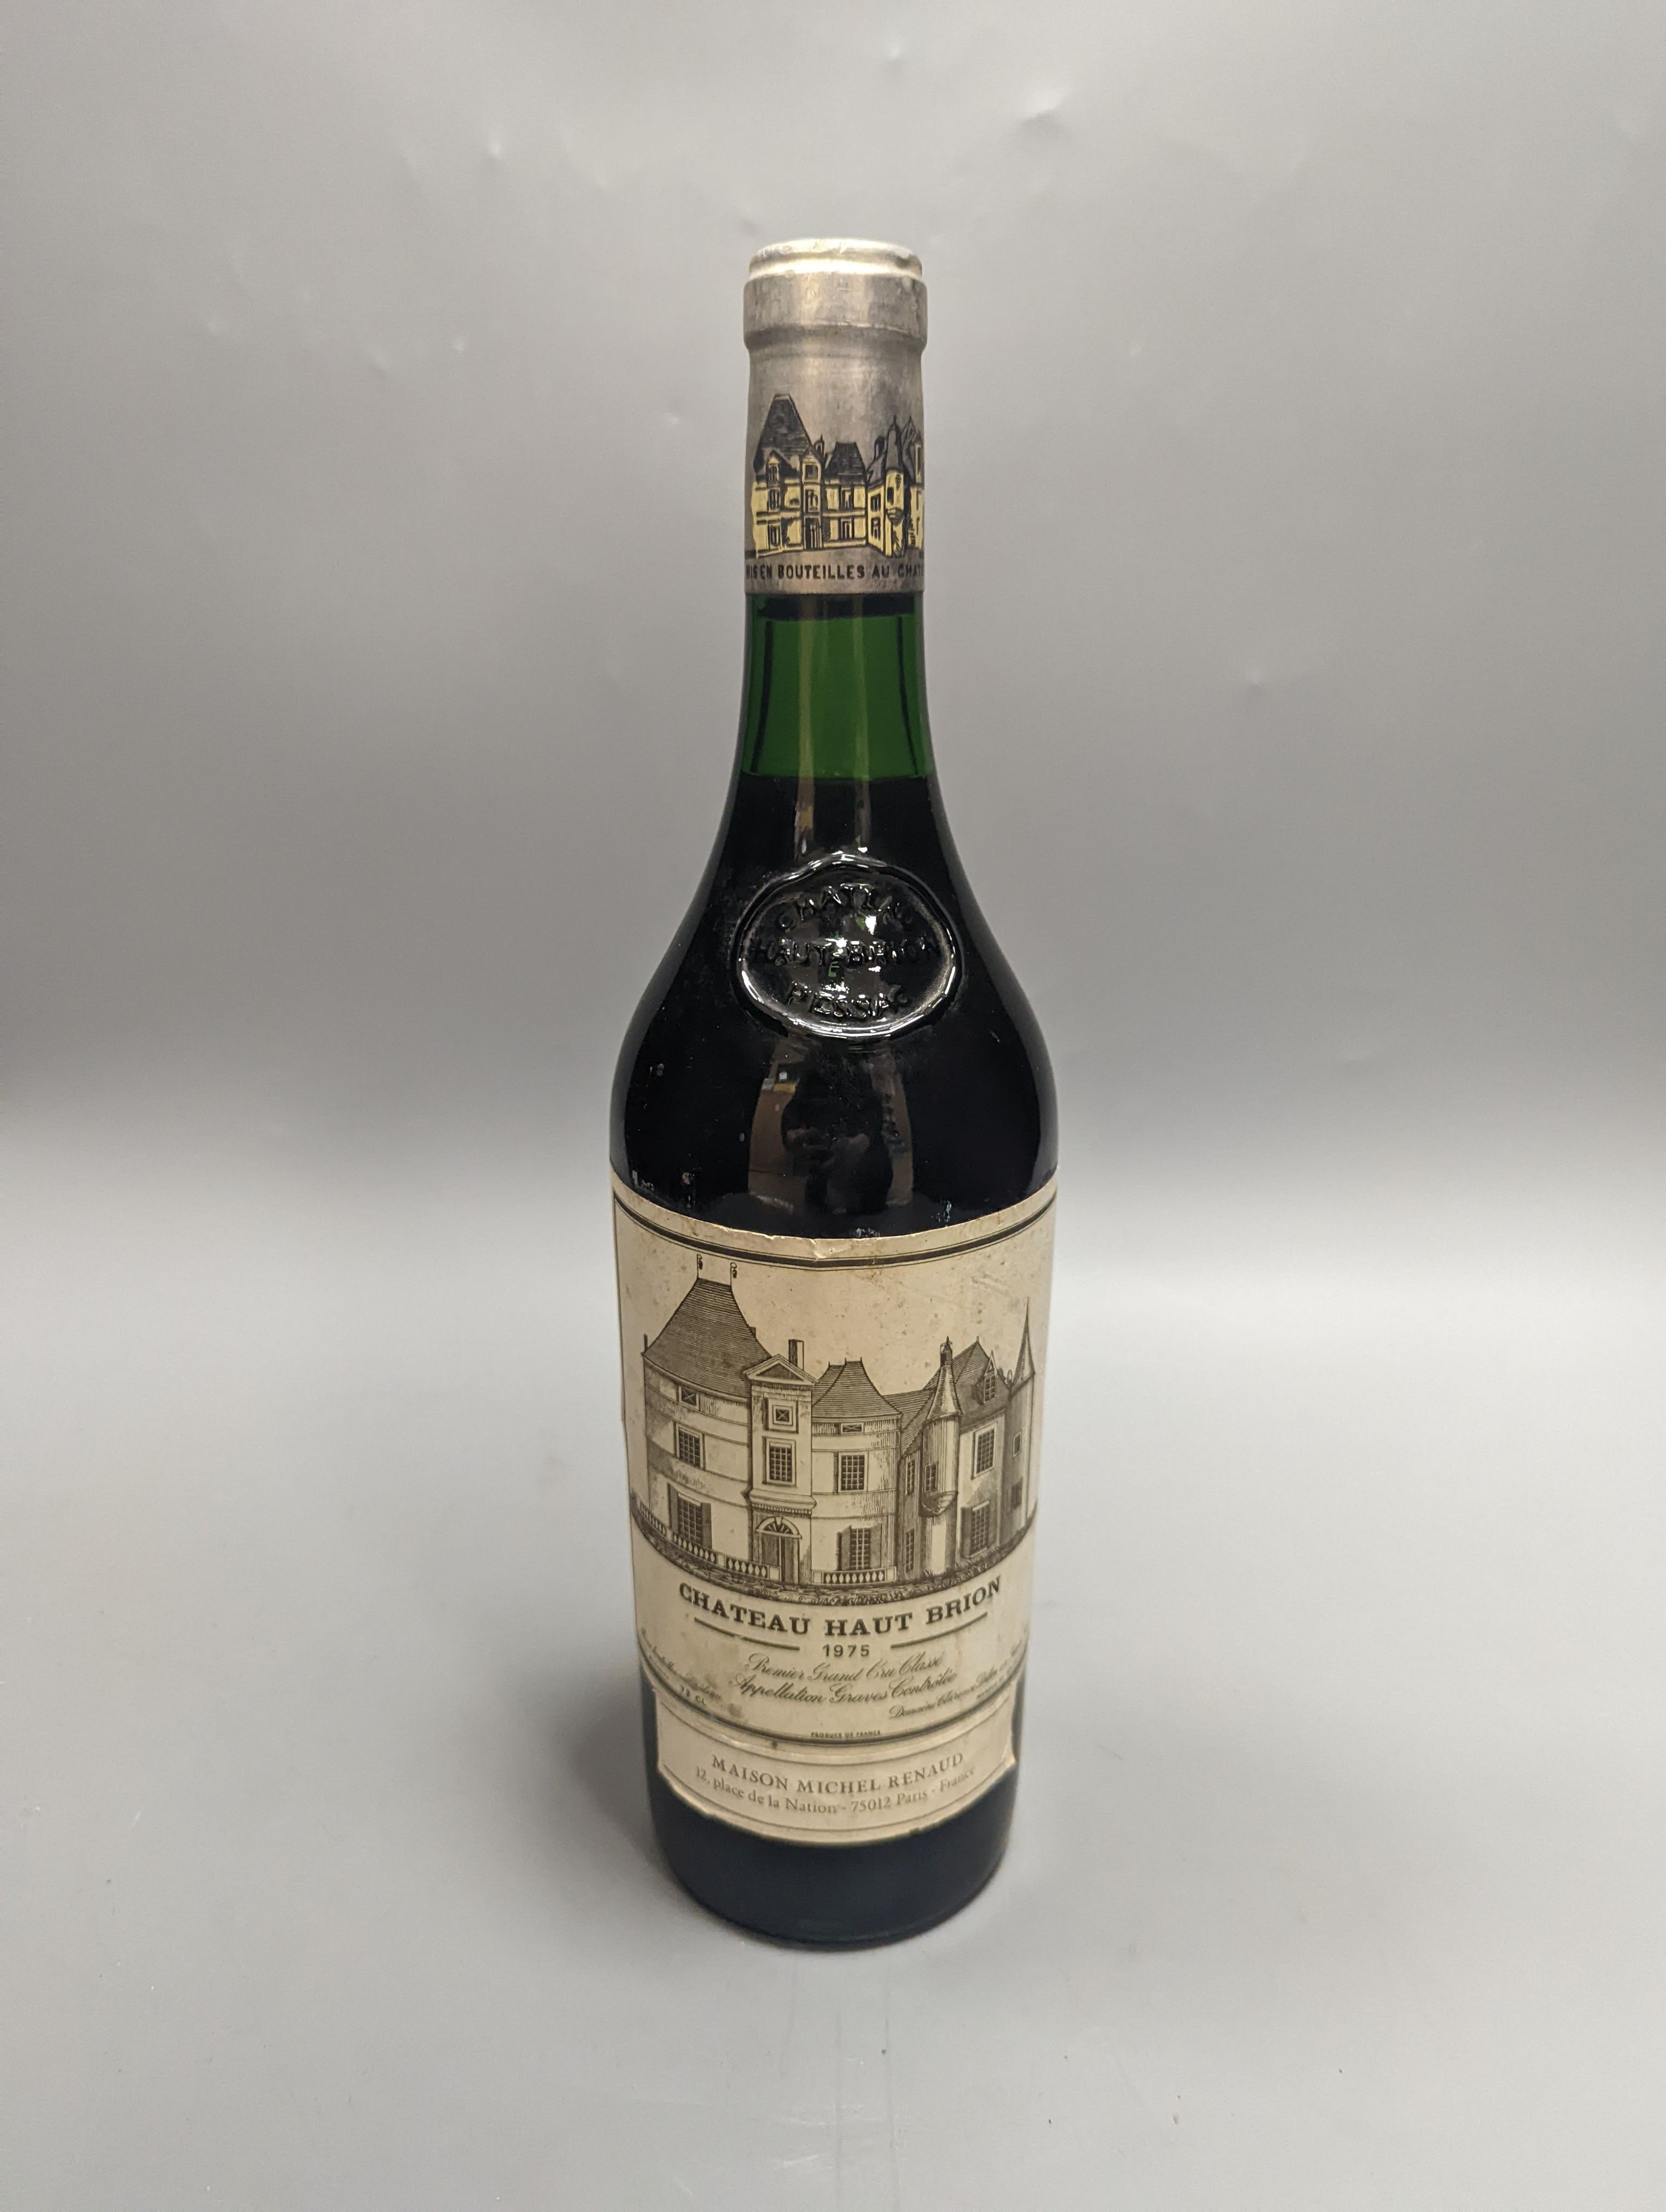 One bottle of Chateau Haut Brion 1975